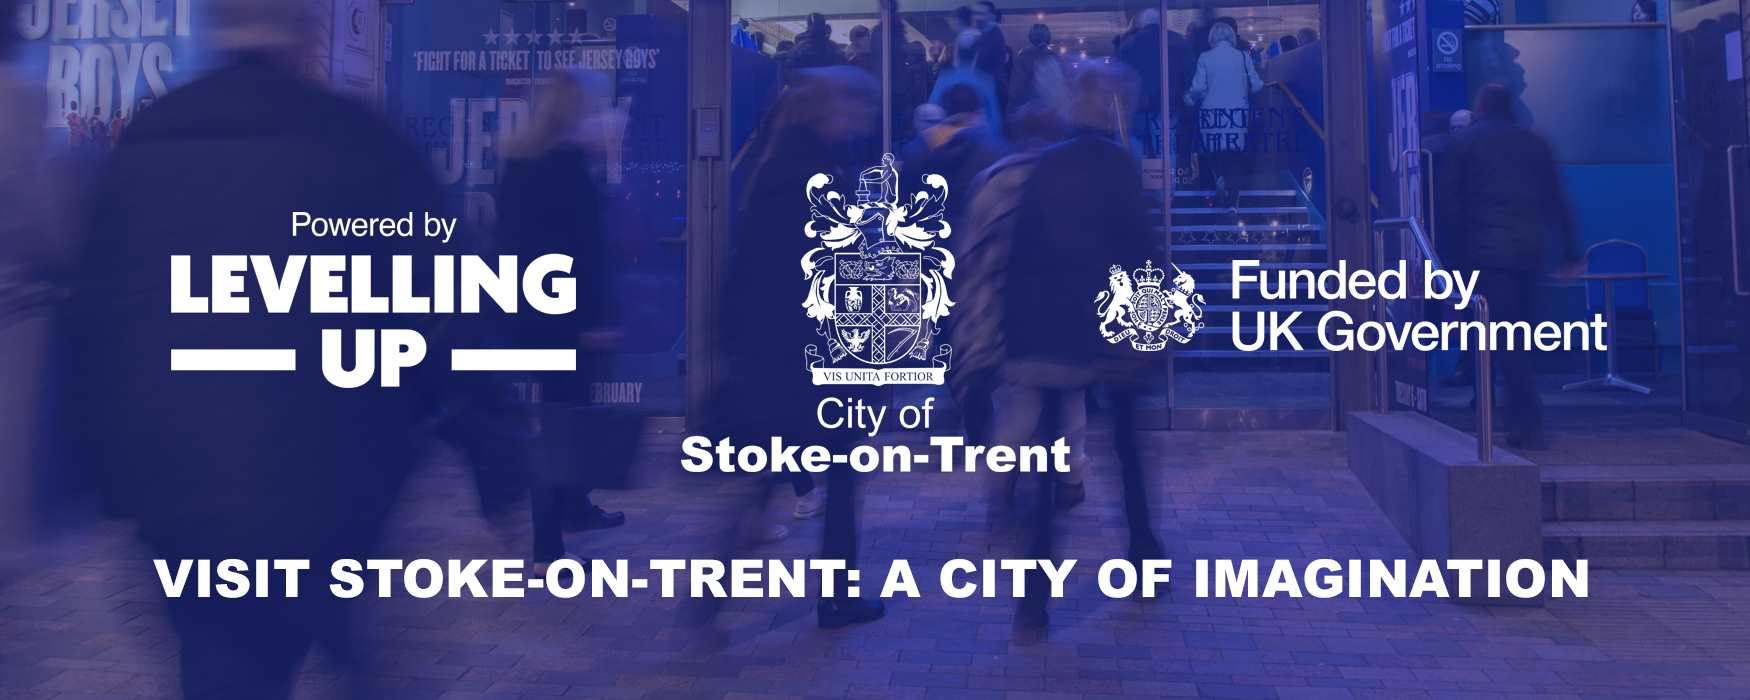 Visit Stoke-on-Trent: A City of Imagination programme